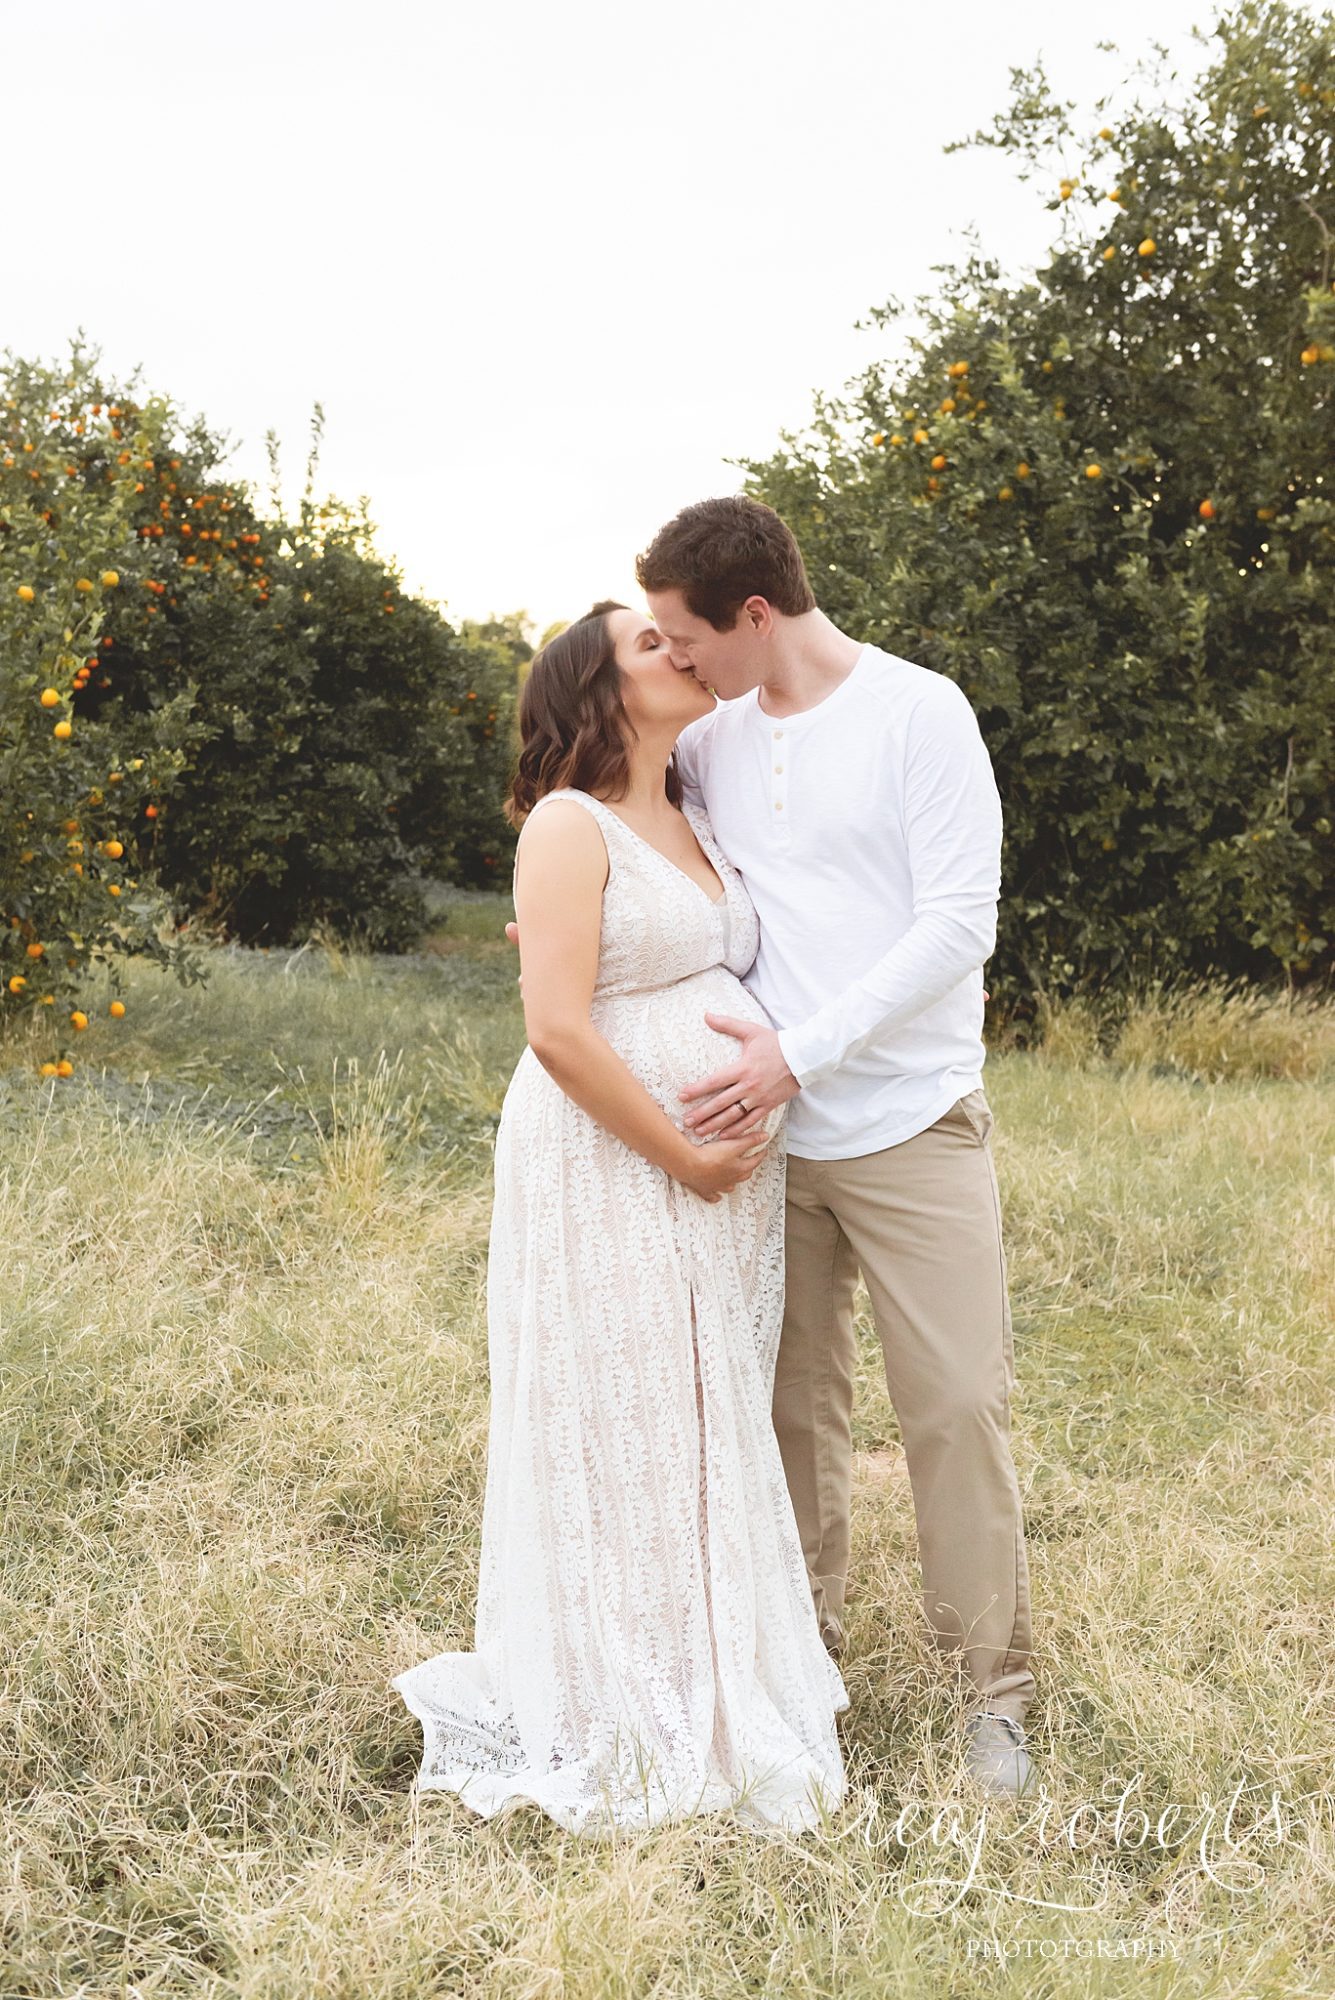 Chandler maternity photographer pregnancy photos in orange grove